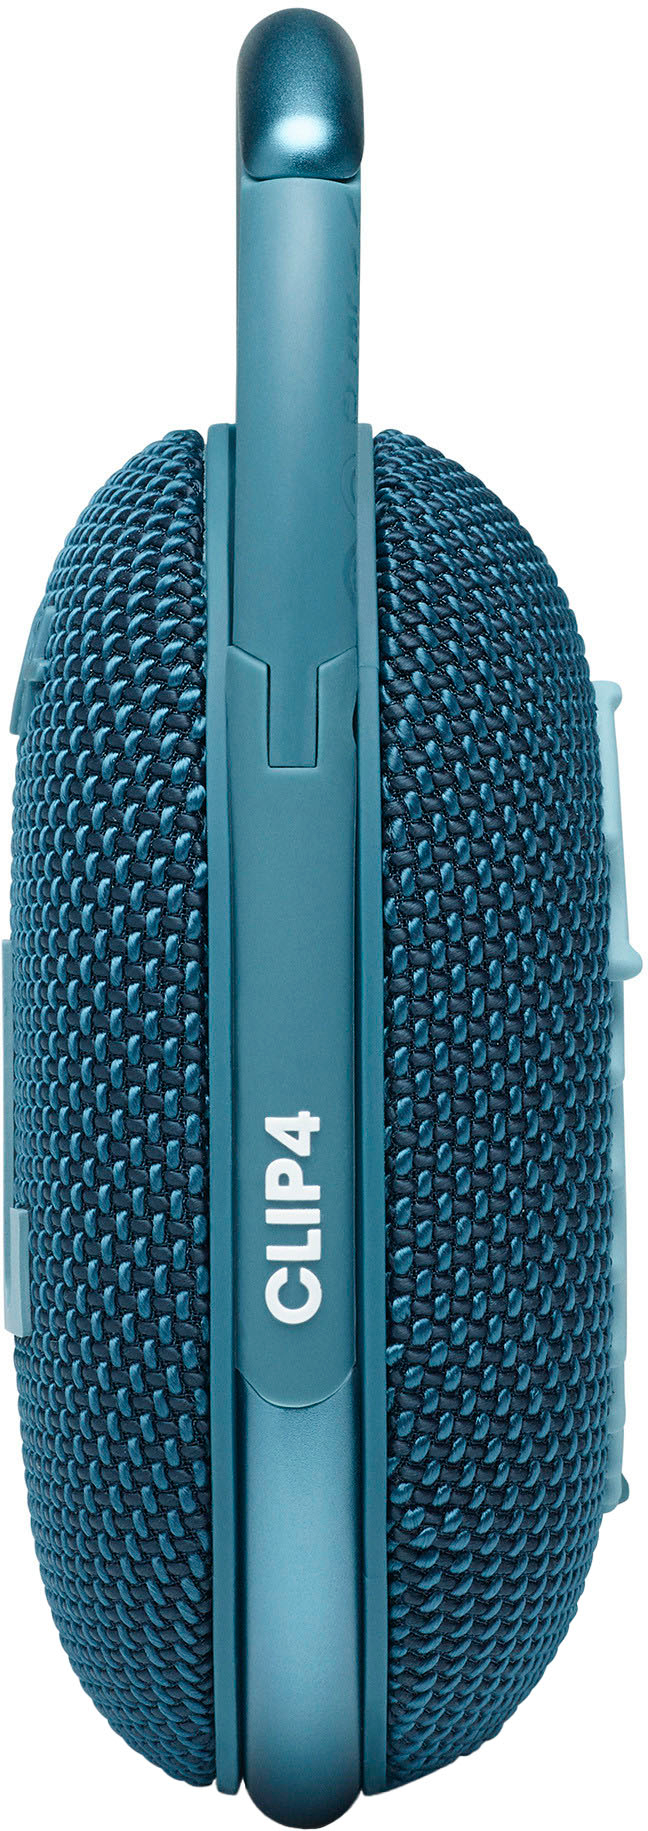 JBL Clip 4 Portable Bluetooth Speaker - Blue - Curacao 